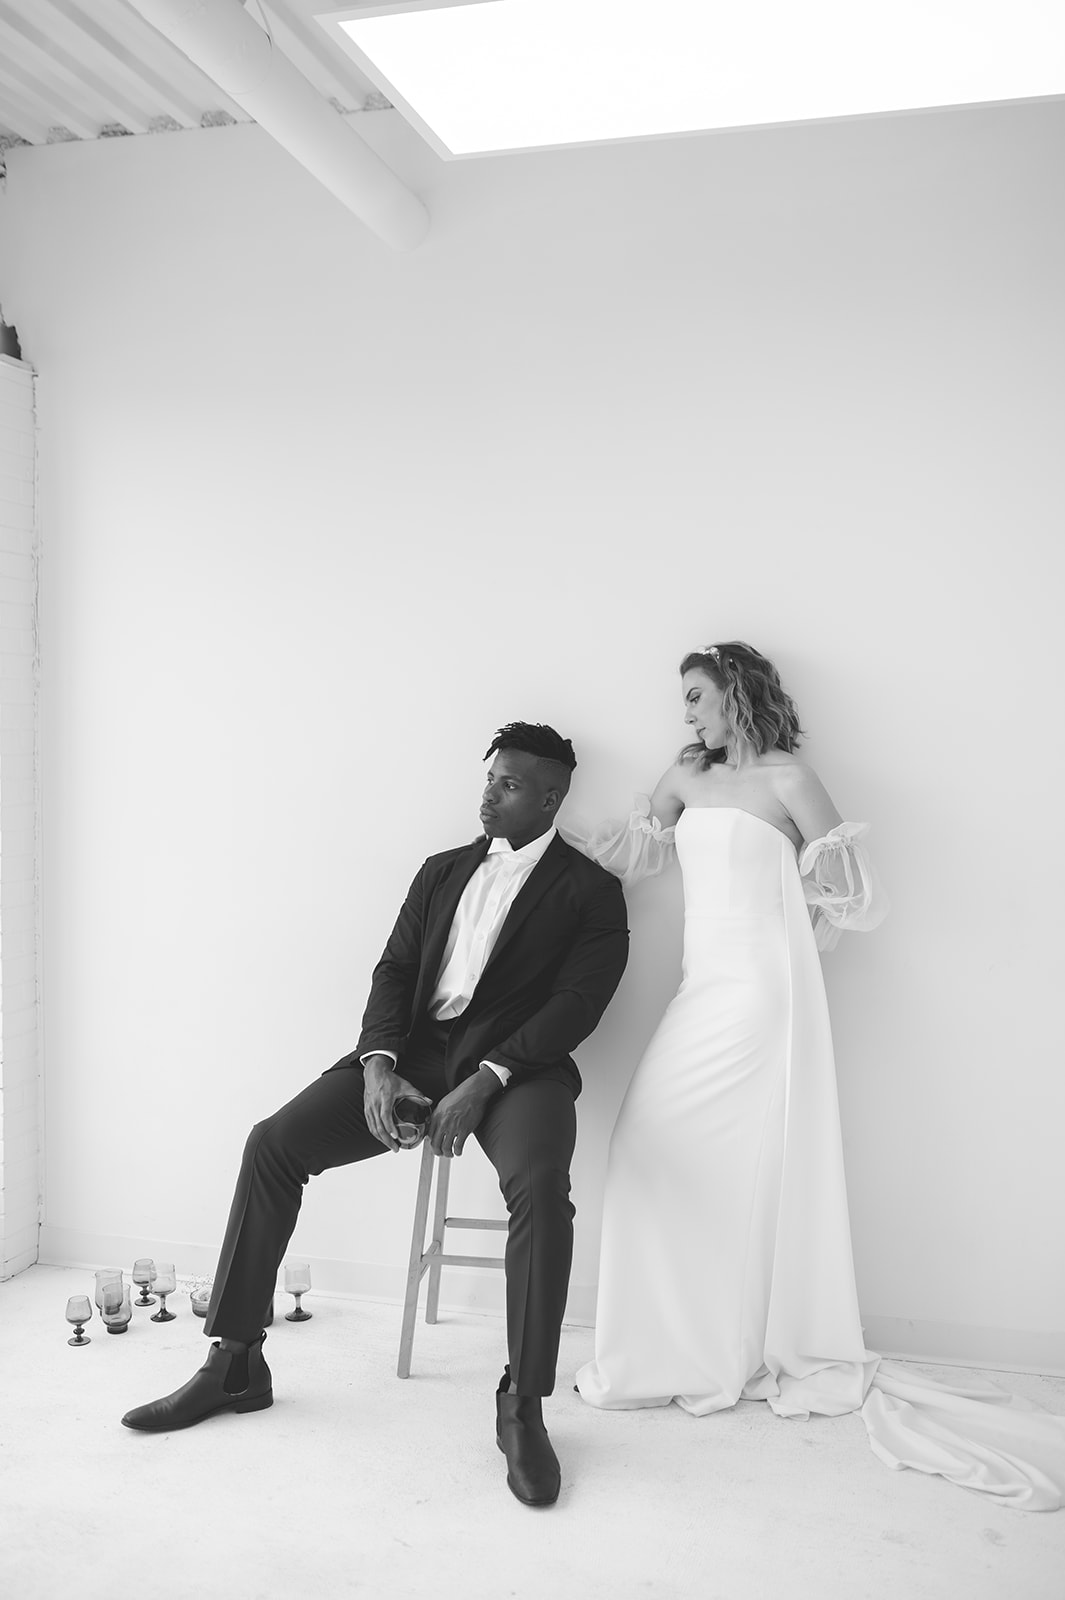 Chic neutral minimalist wedding inspiration, neutral wedding colour scheme, chic bridal Inspo, black and white photography